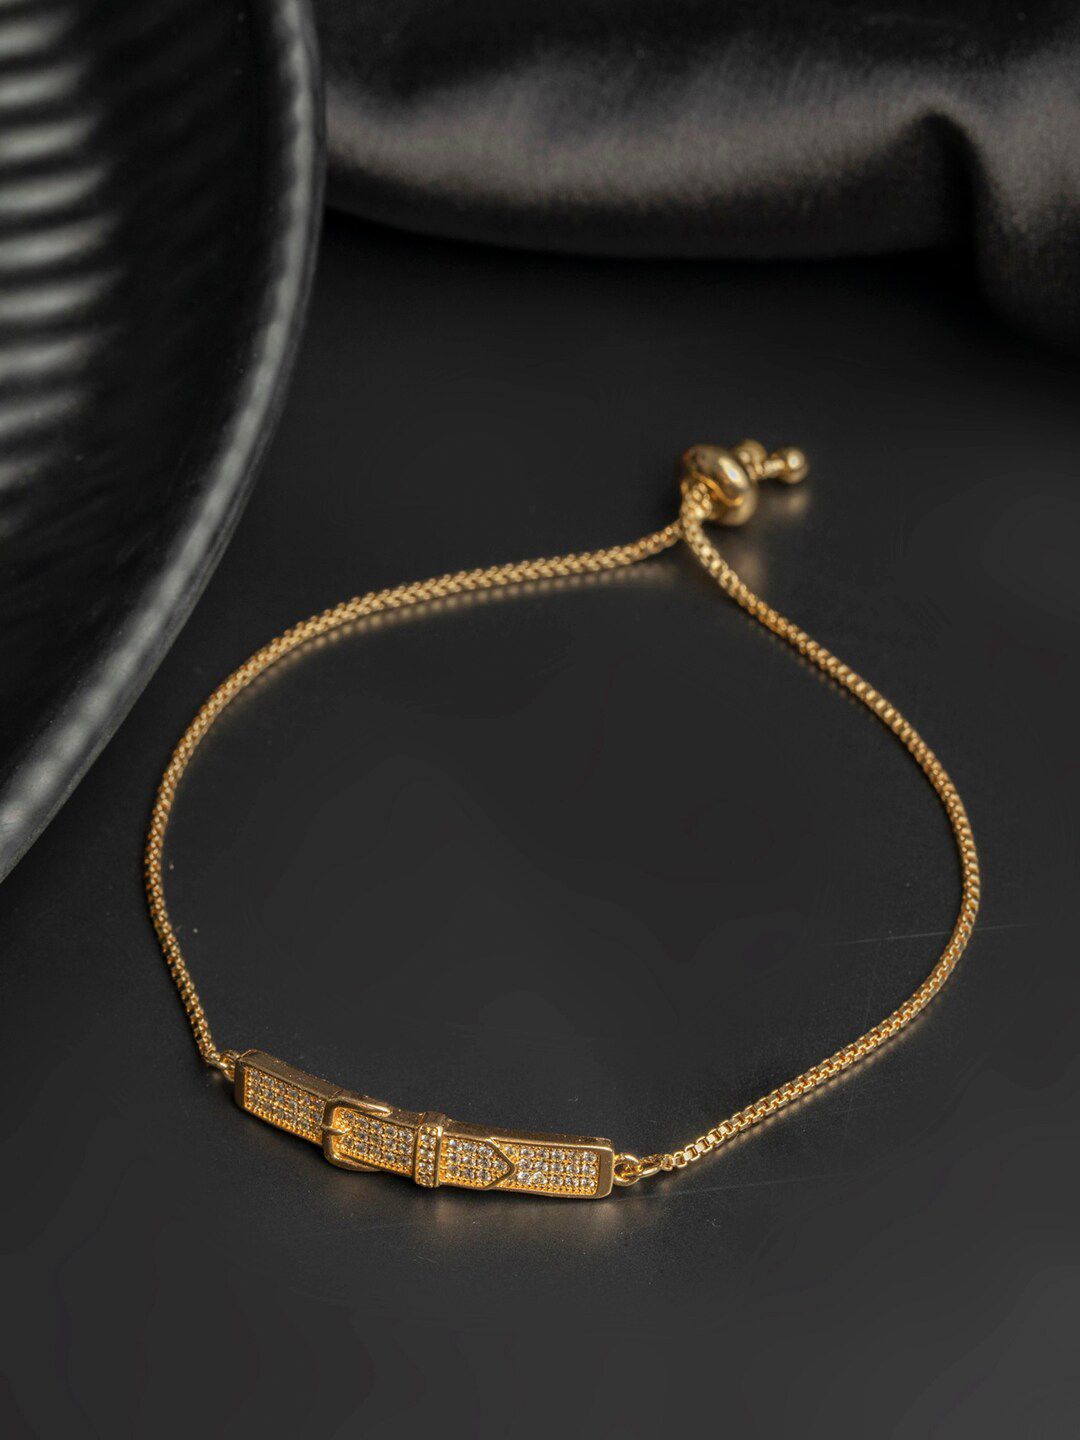 PRITA Women Rose Gold-Toned AD Studded Belt Patterned Charm Bracelet Price in India